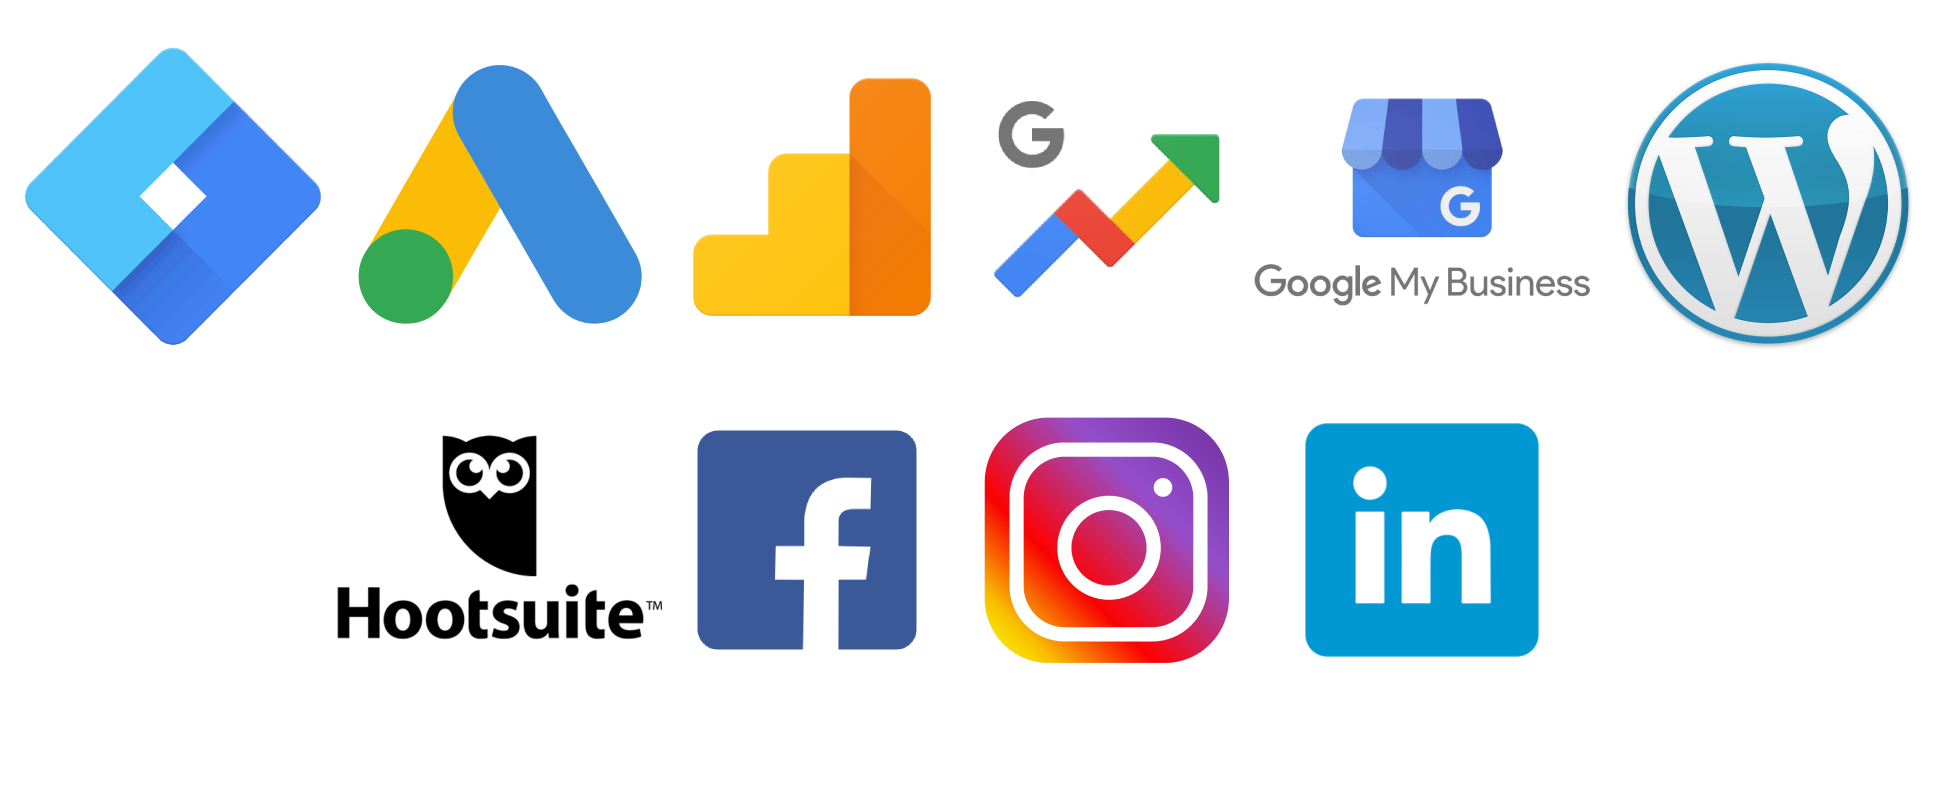 Servizi offerti: Google Tag, Ads, Analytics, Trends, MyBusiness, MailChimp, Wordpress, Hootsuite, Pixel Facebook, Facebook, Instagram, Linkedin.